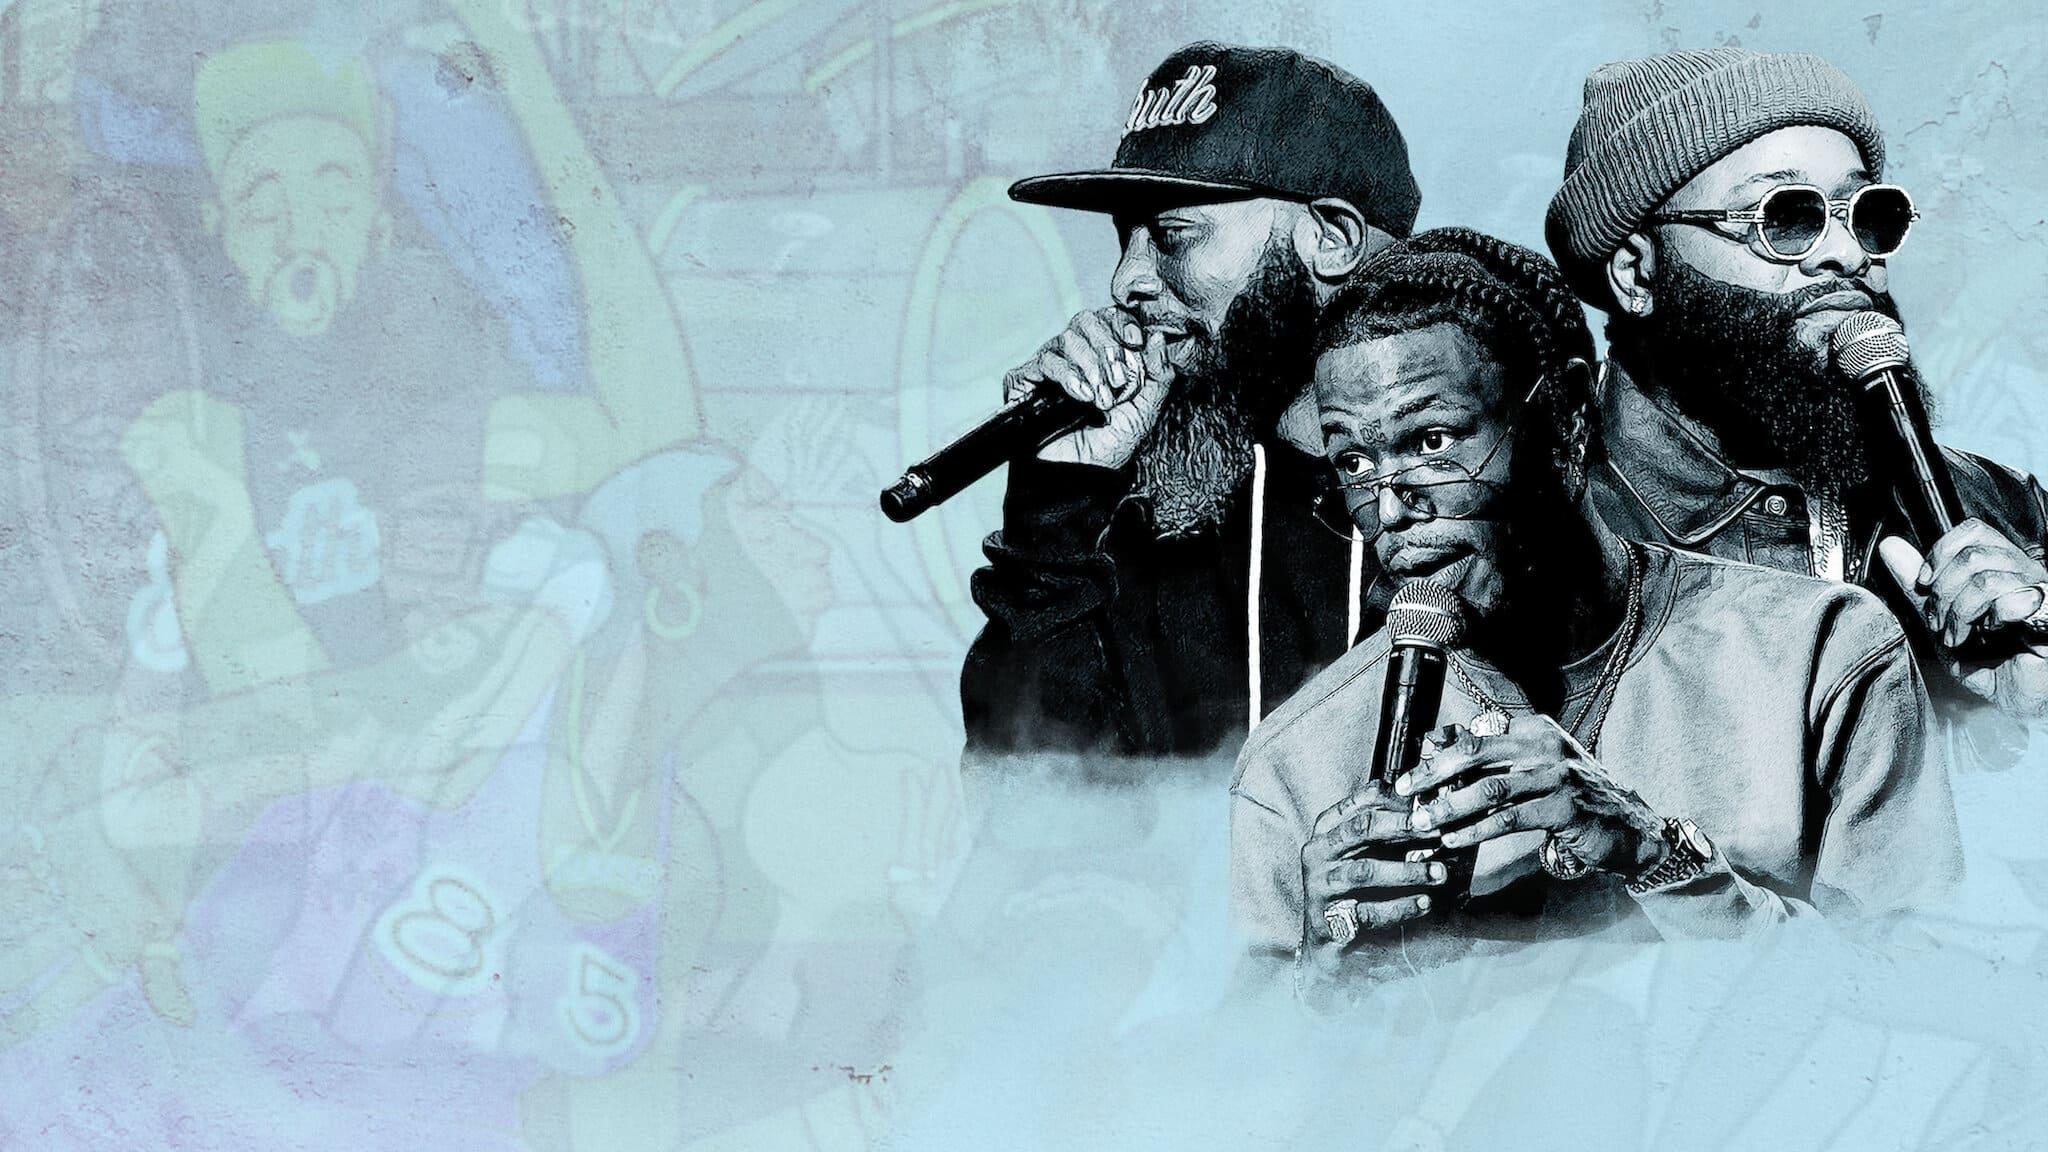 85 South: Ghetto Legends backdrop